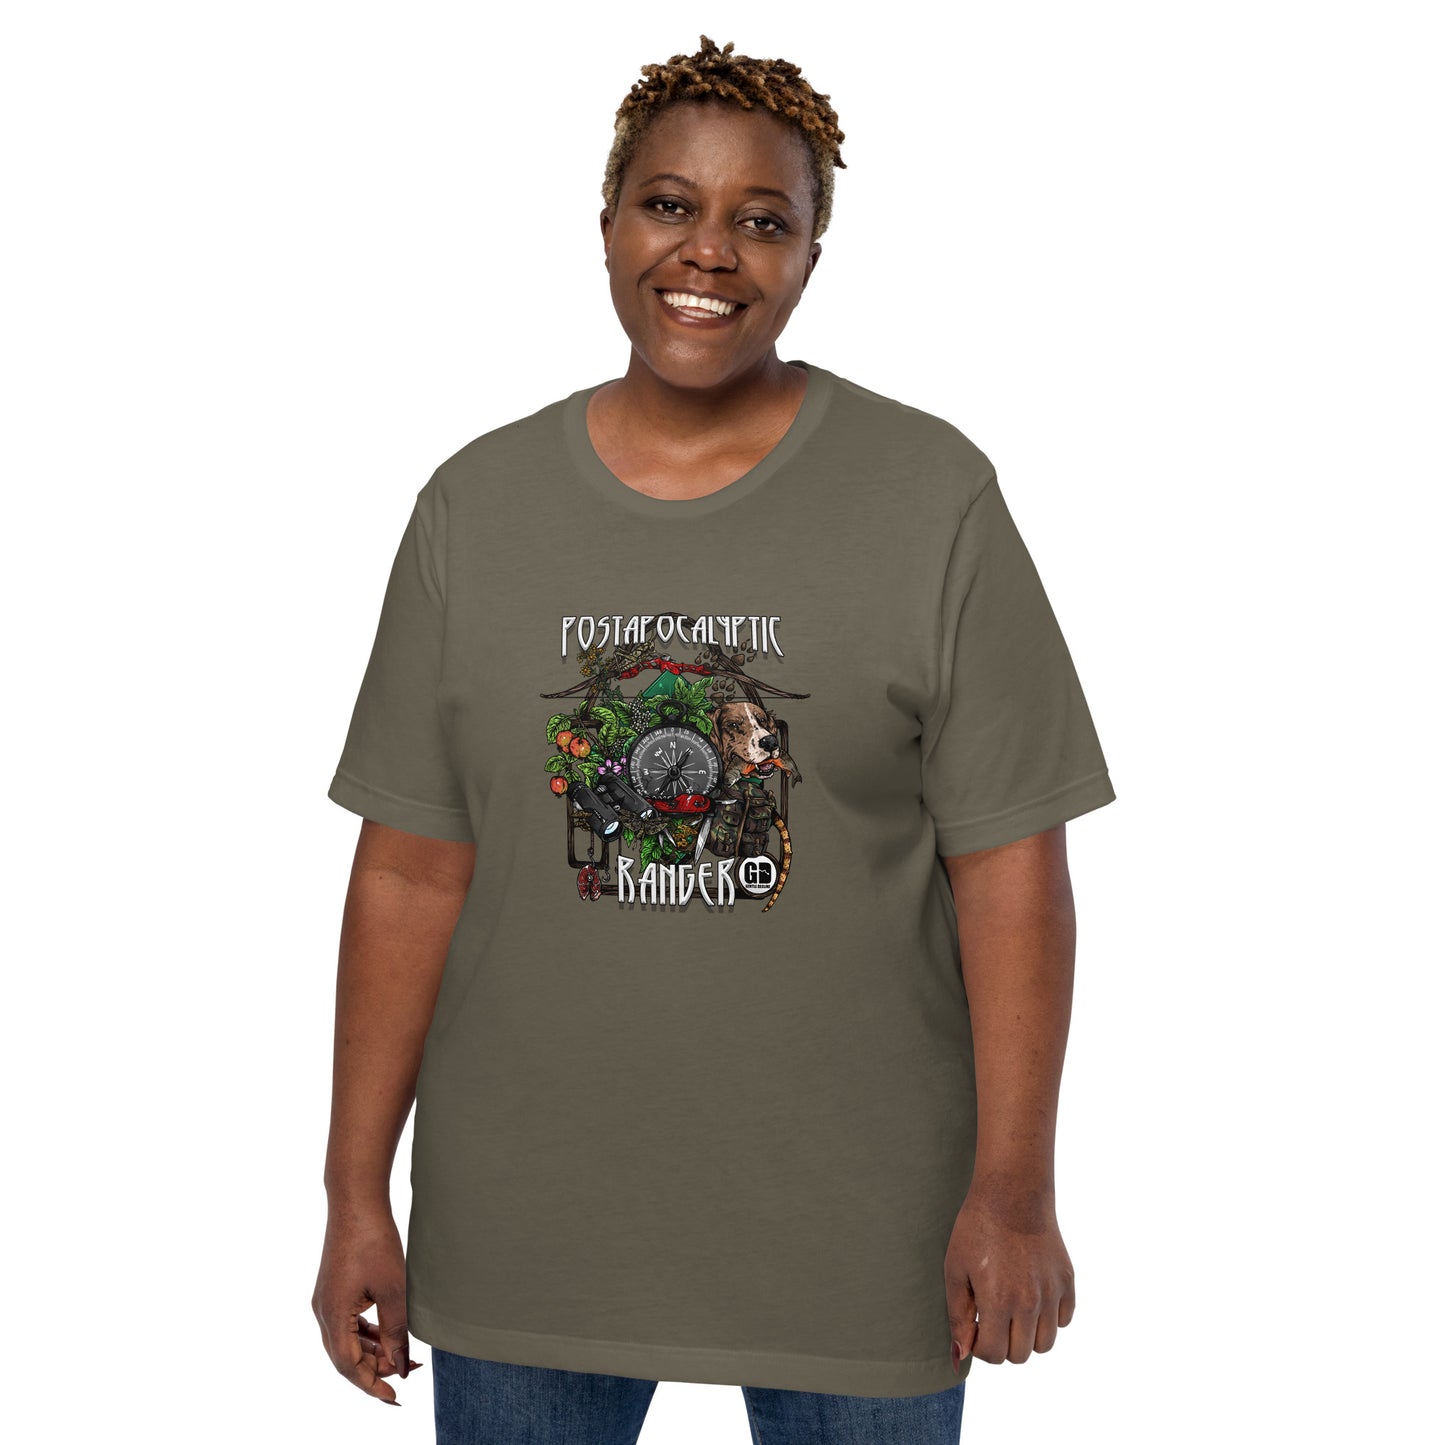 Post-Apocalyptic Ranger Unisex t-shirt